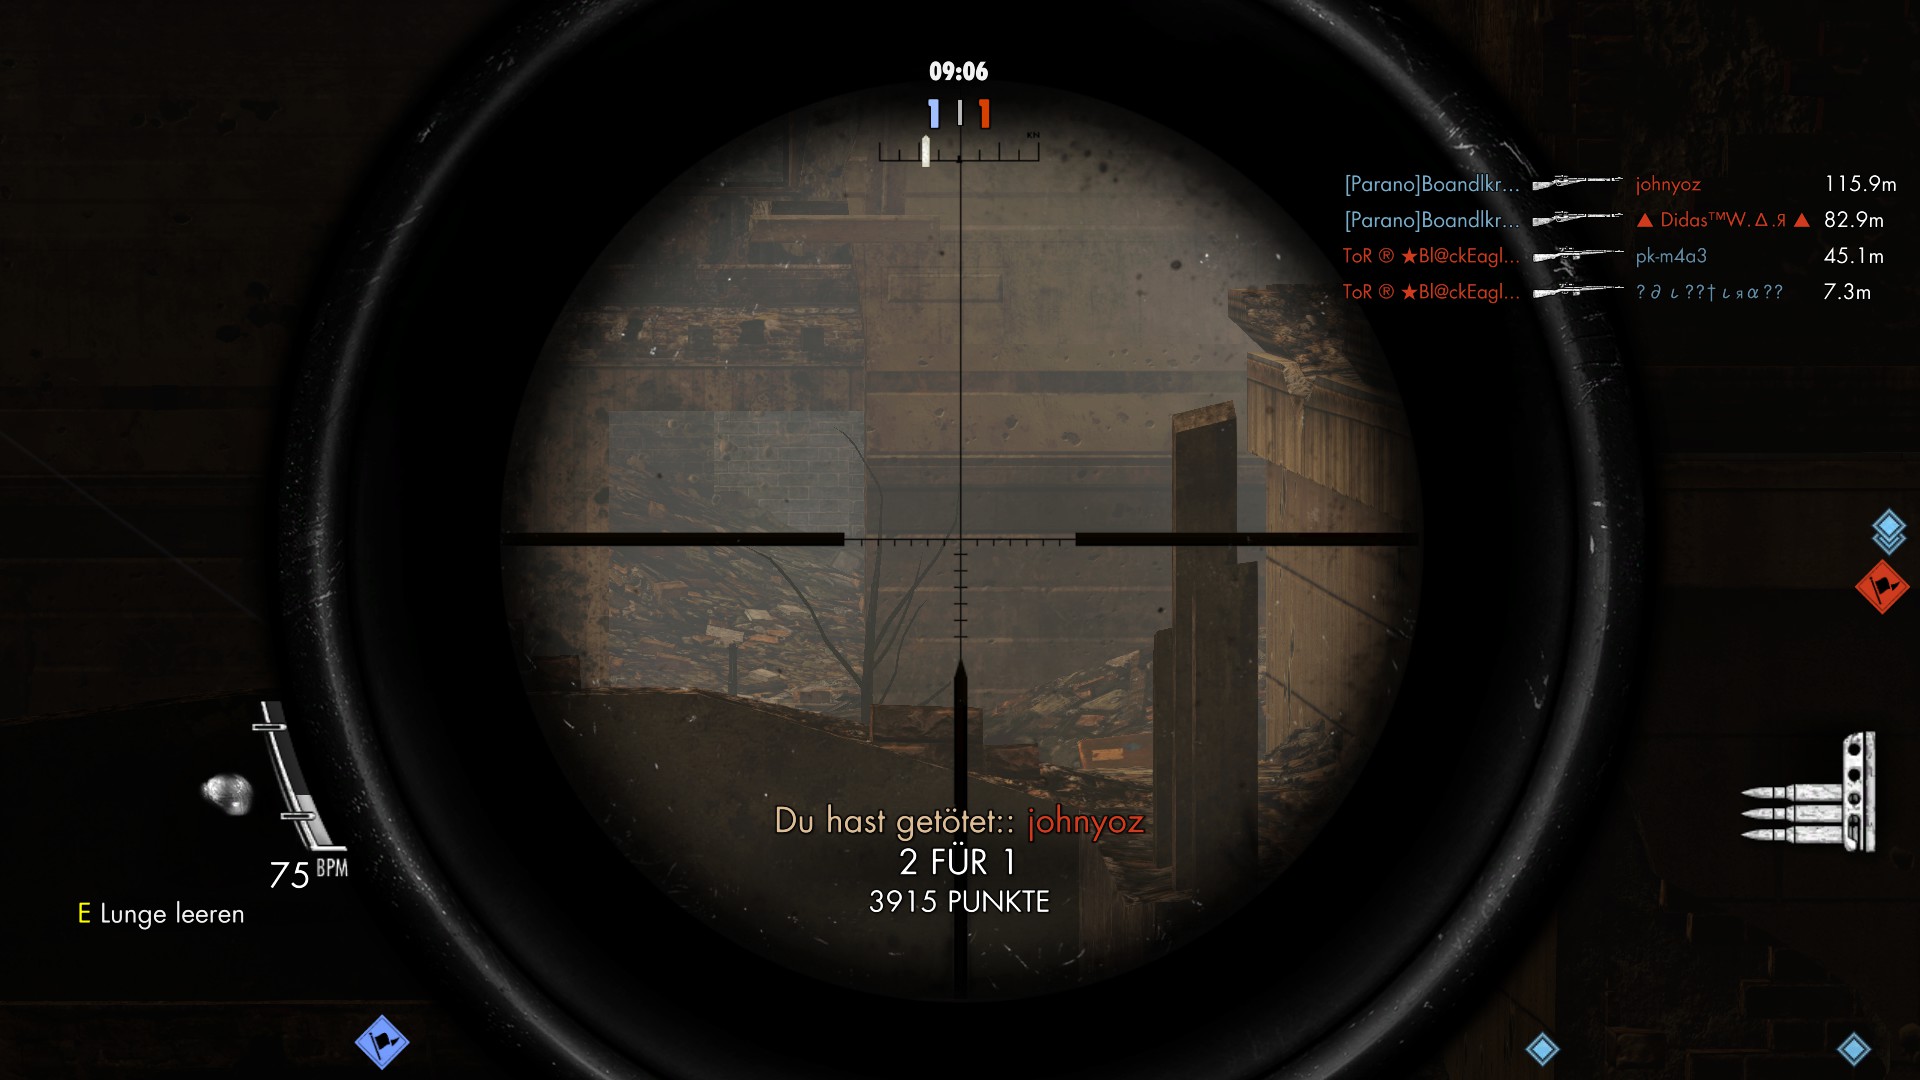 sniper elite v2 torrent opens steam